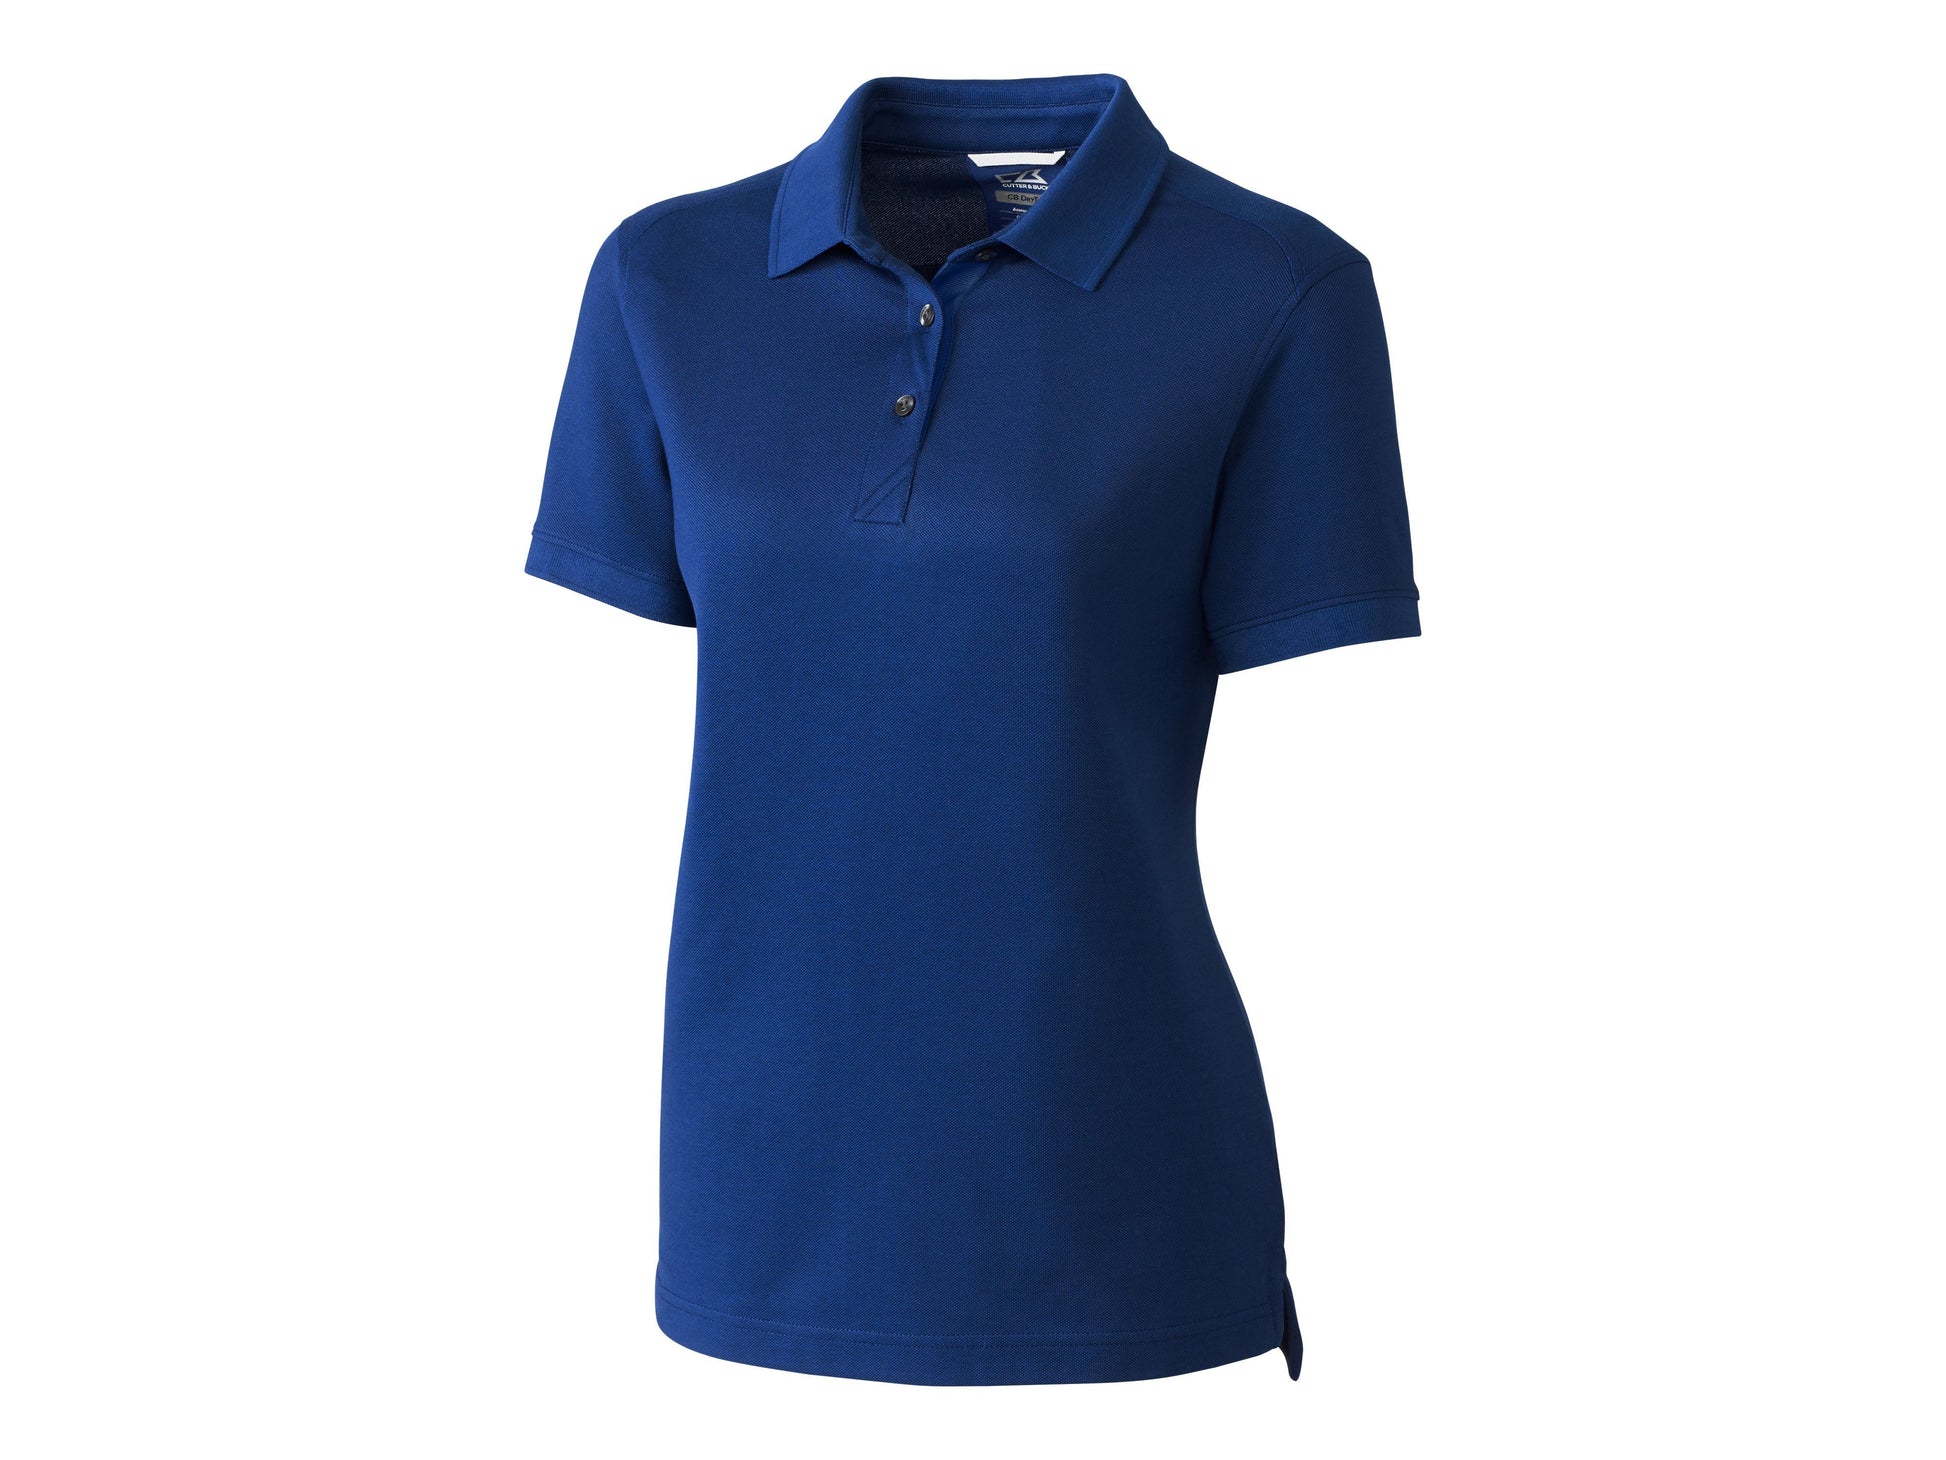 Cutter and Buck Shirts Advantage Polo (Women's Cut) - LCK08685 - Tour Blue